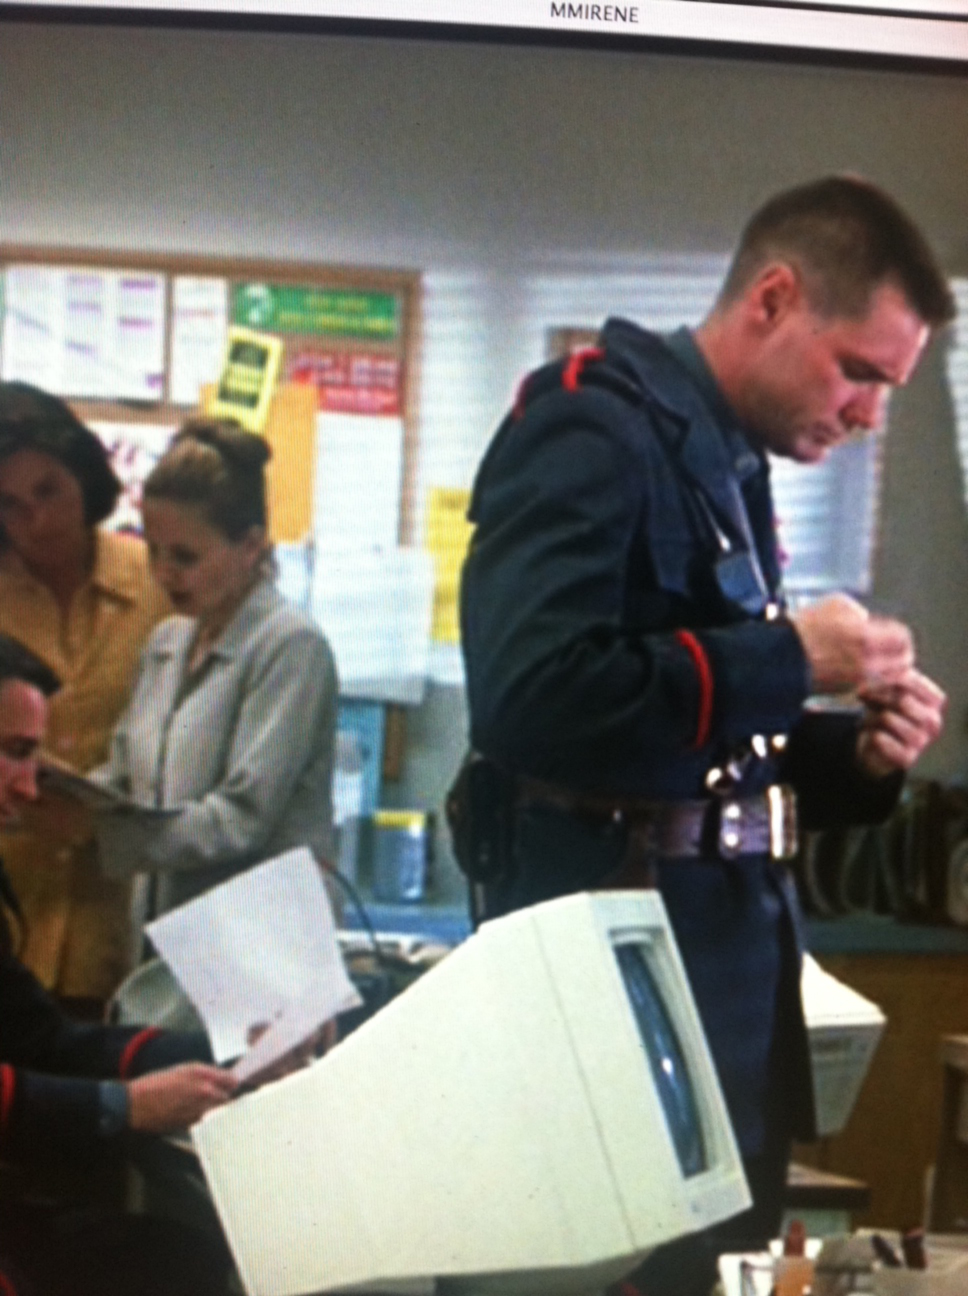 Me, Myself & Irene / the office scene with Jim Carrey